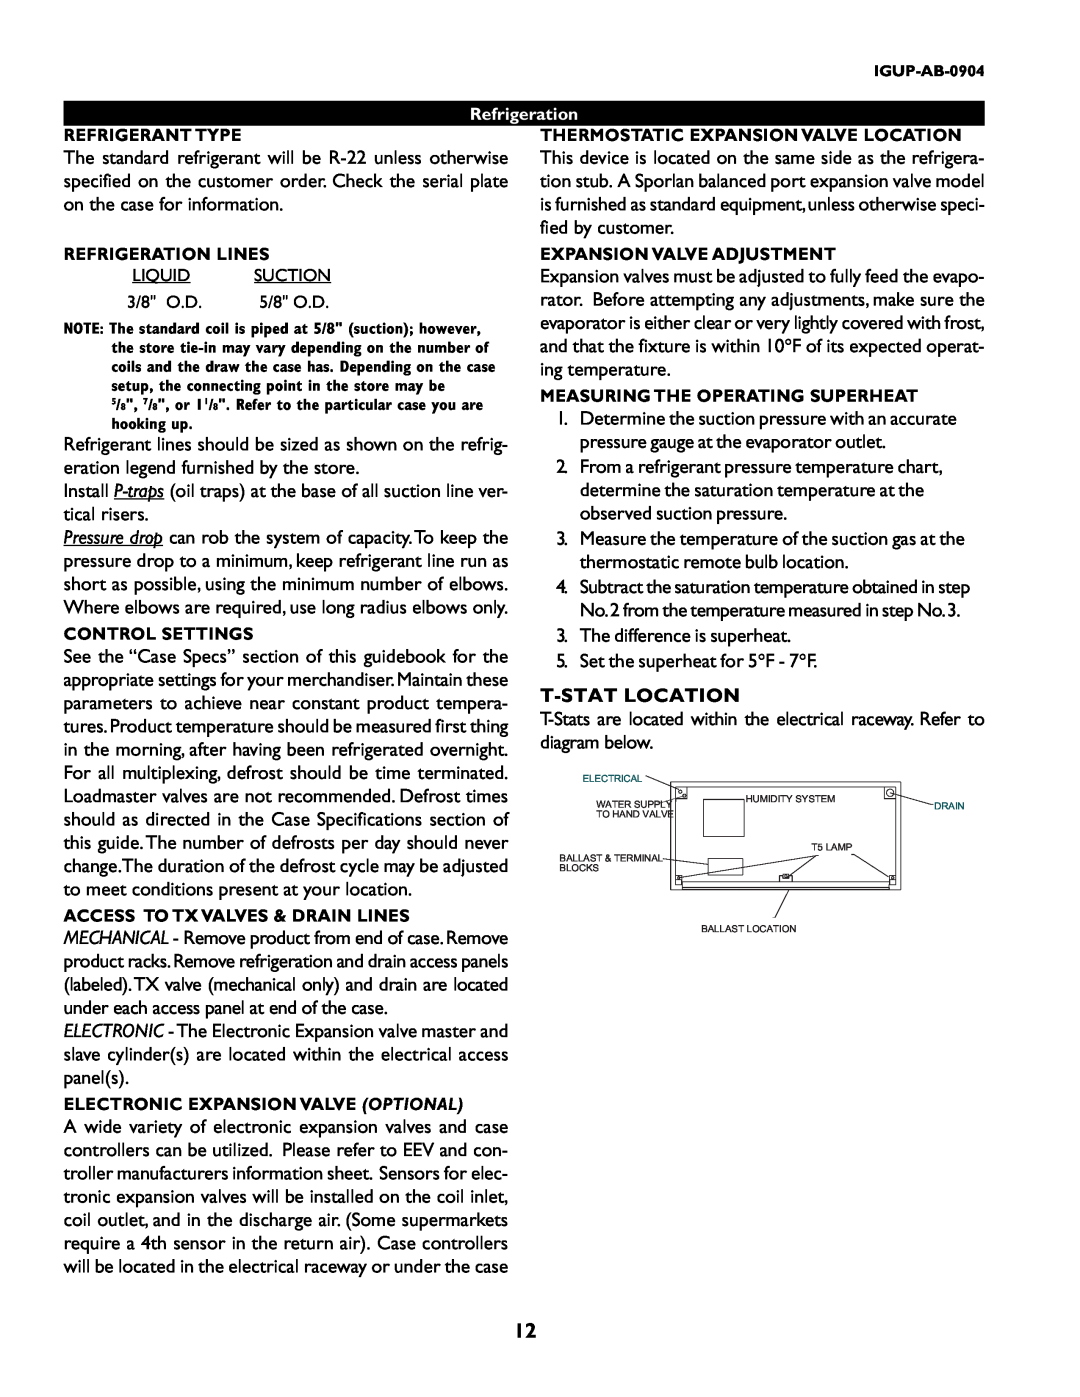 hussman P/N IGUP-AB-0904 operation manual T-Statlocation 